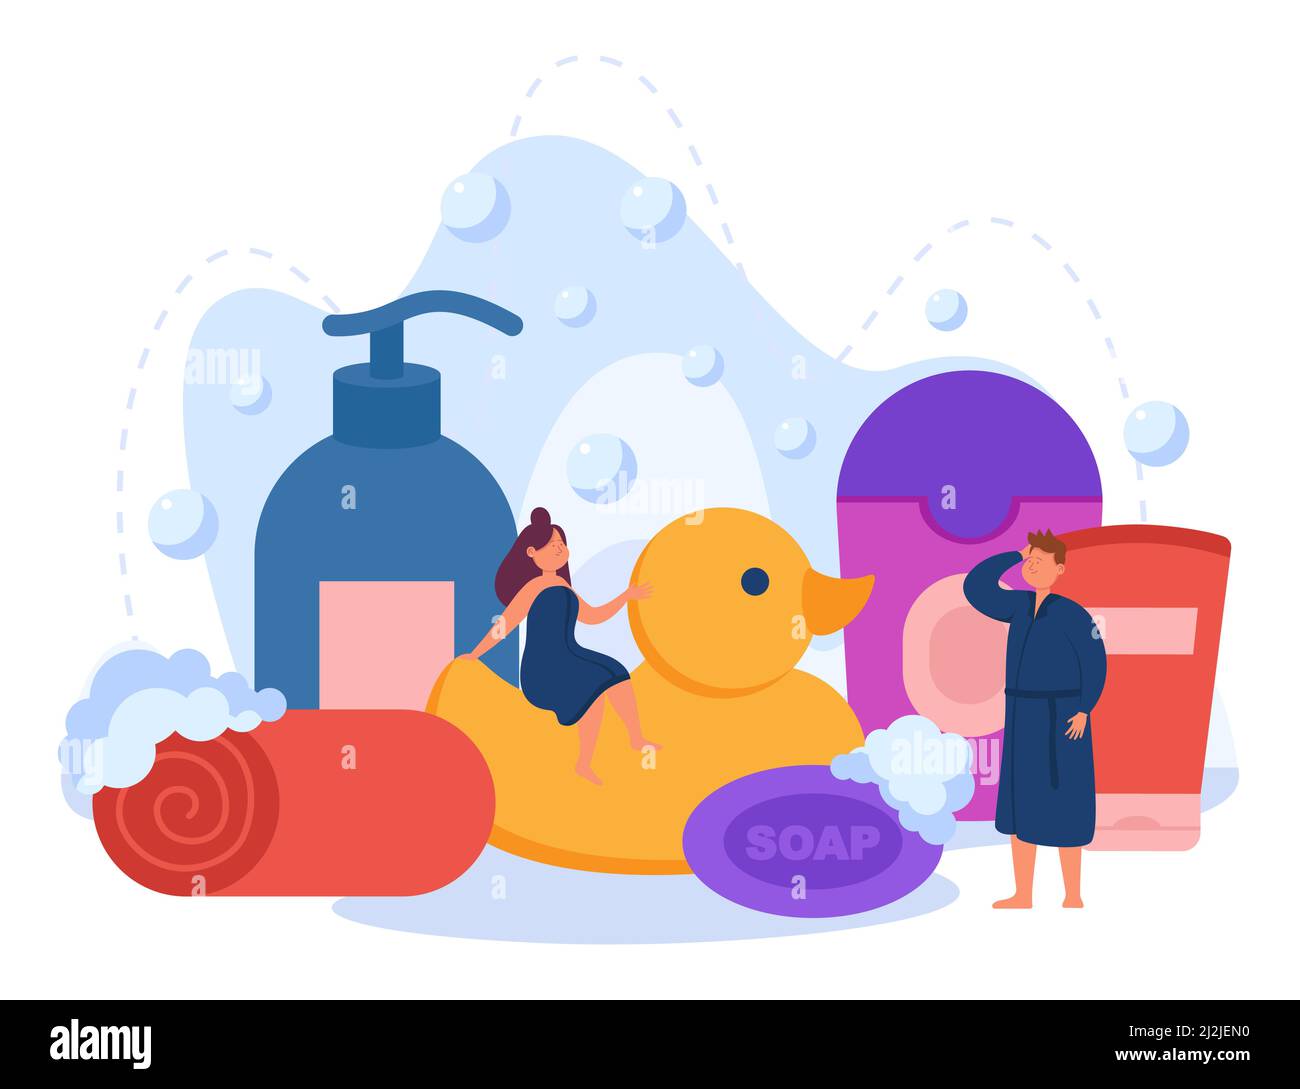 Tiny cartoon people with huge bath cosmetics. Giant soap, sponge and shampoo for bathroom procedures flat vector illustration. Hygiene, spa concept fo Stock Vector